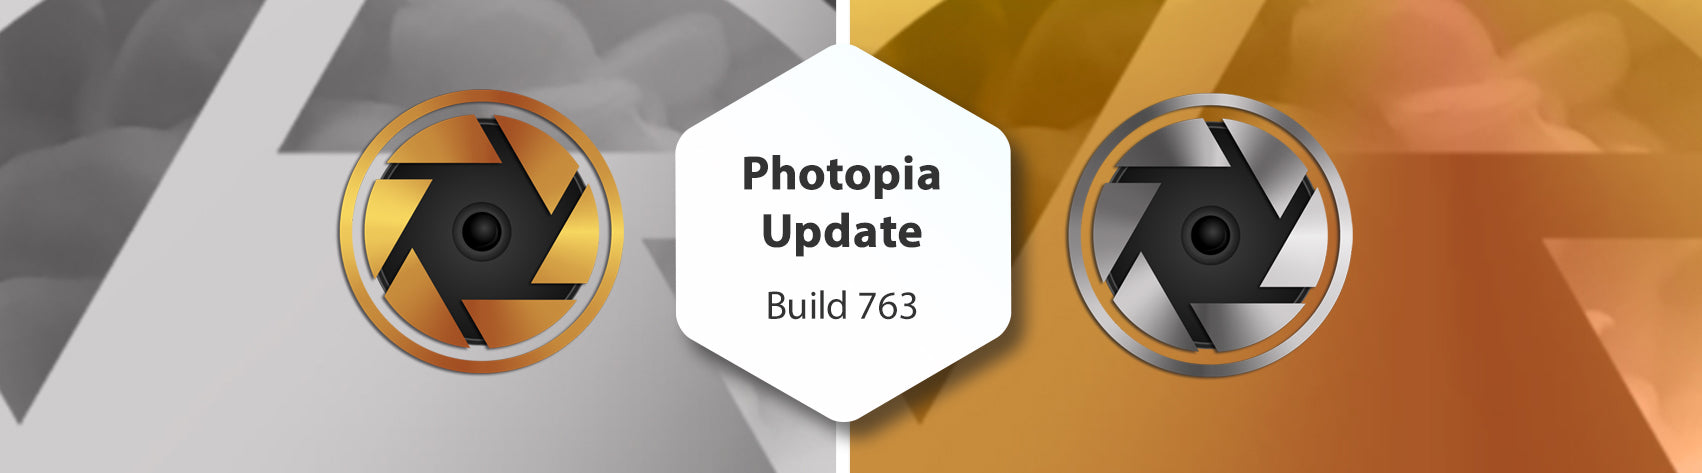 Photopia Update - Build 763